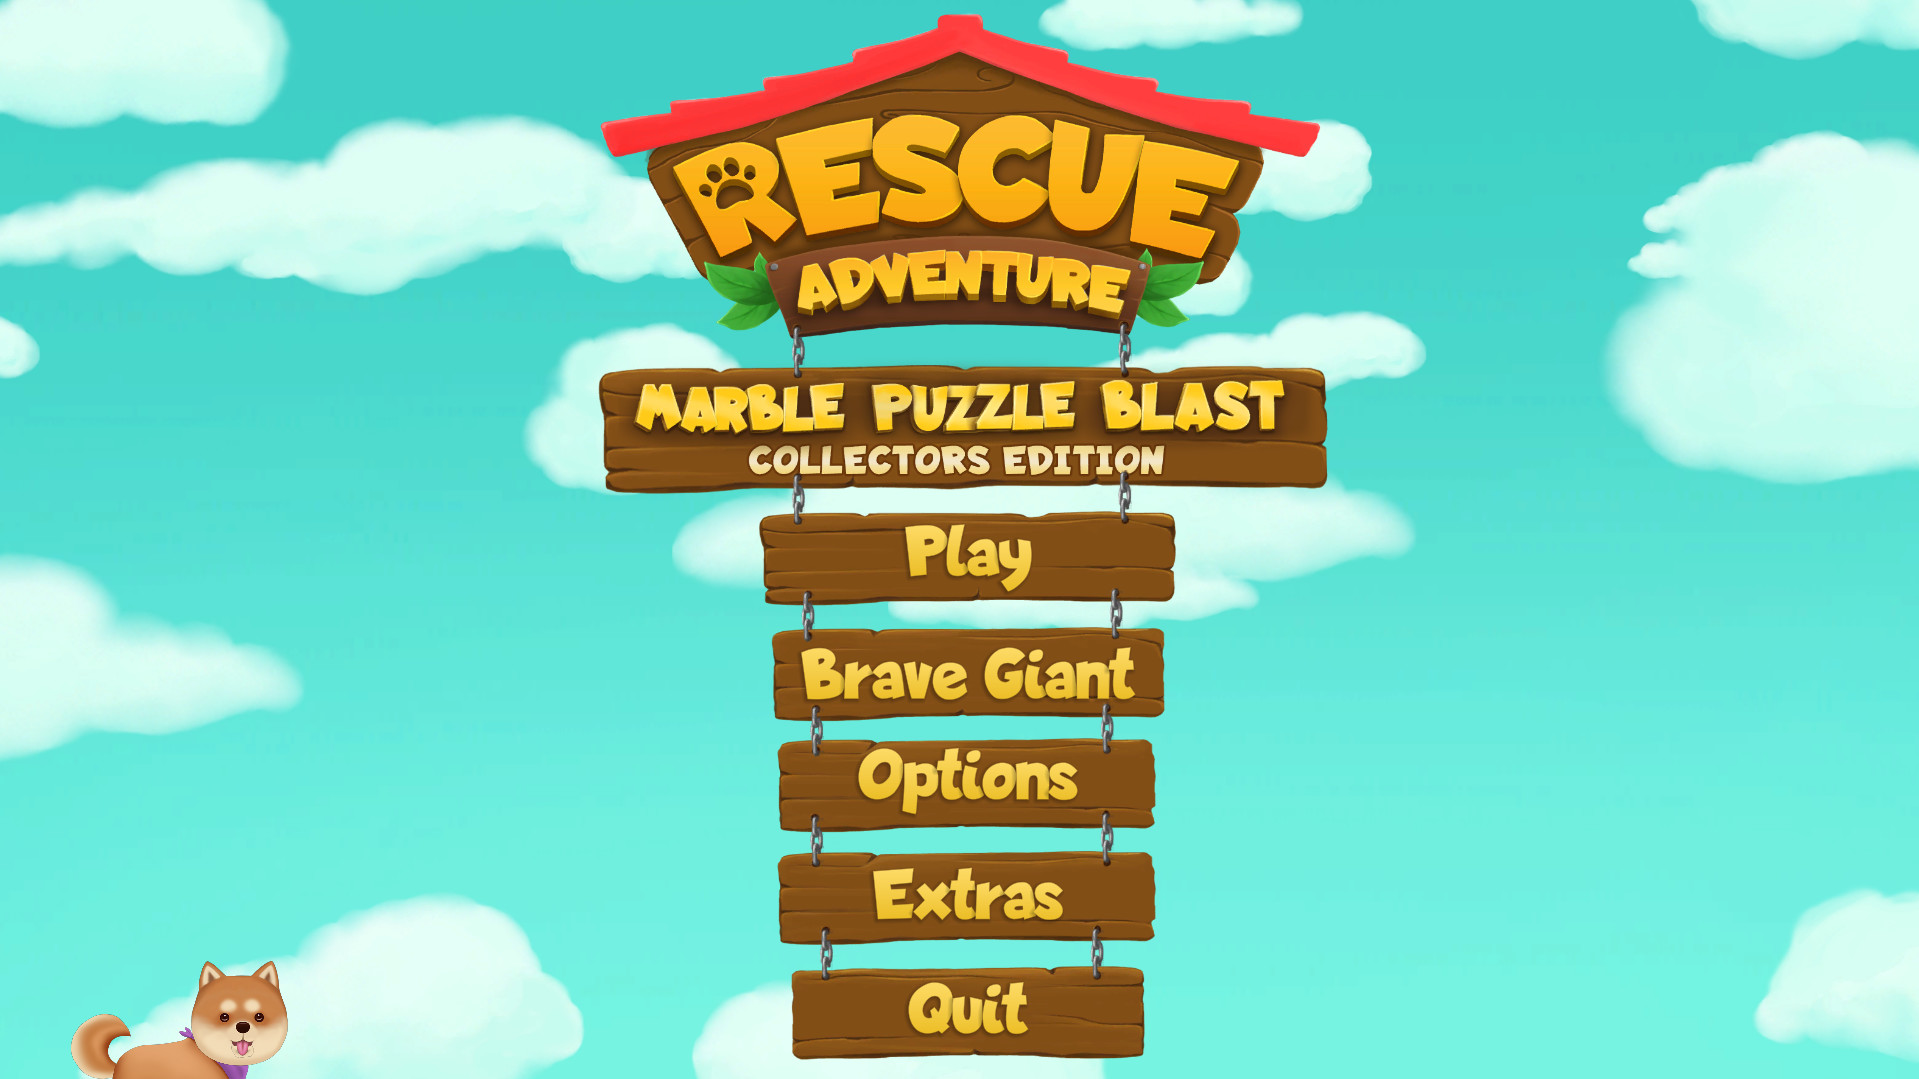 Marble Puzzle Blast - Rescue Adventure Free Download